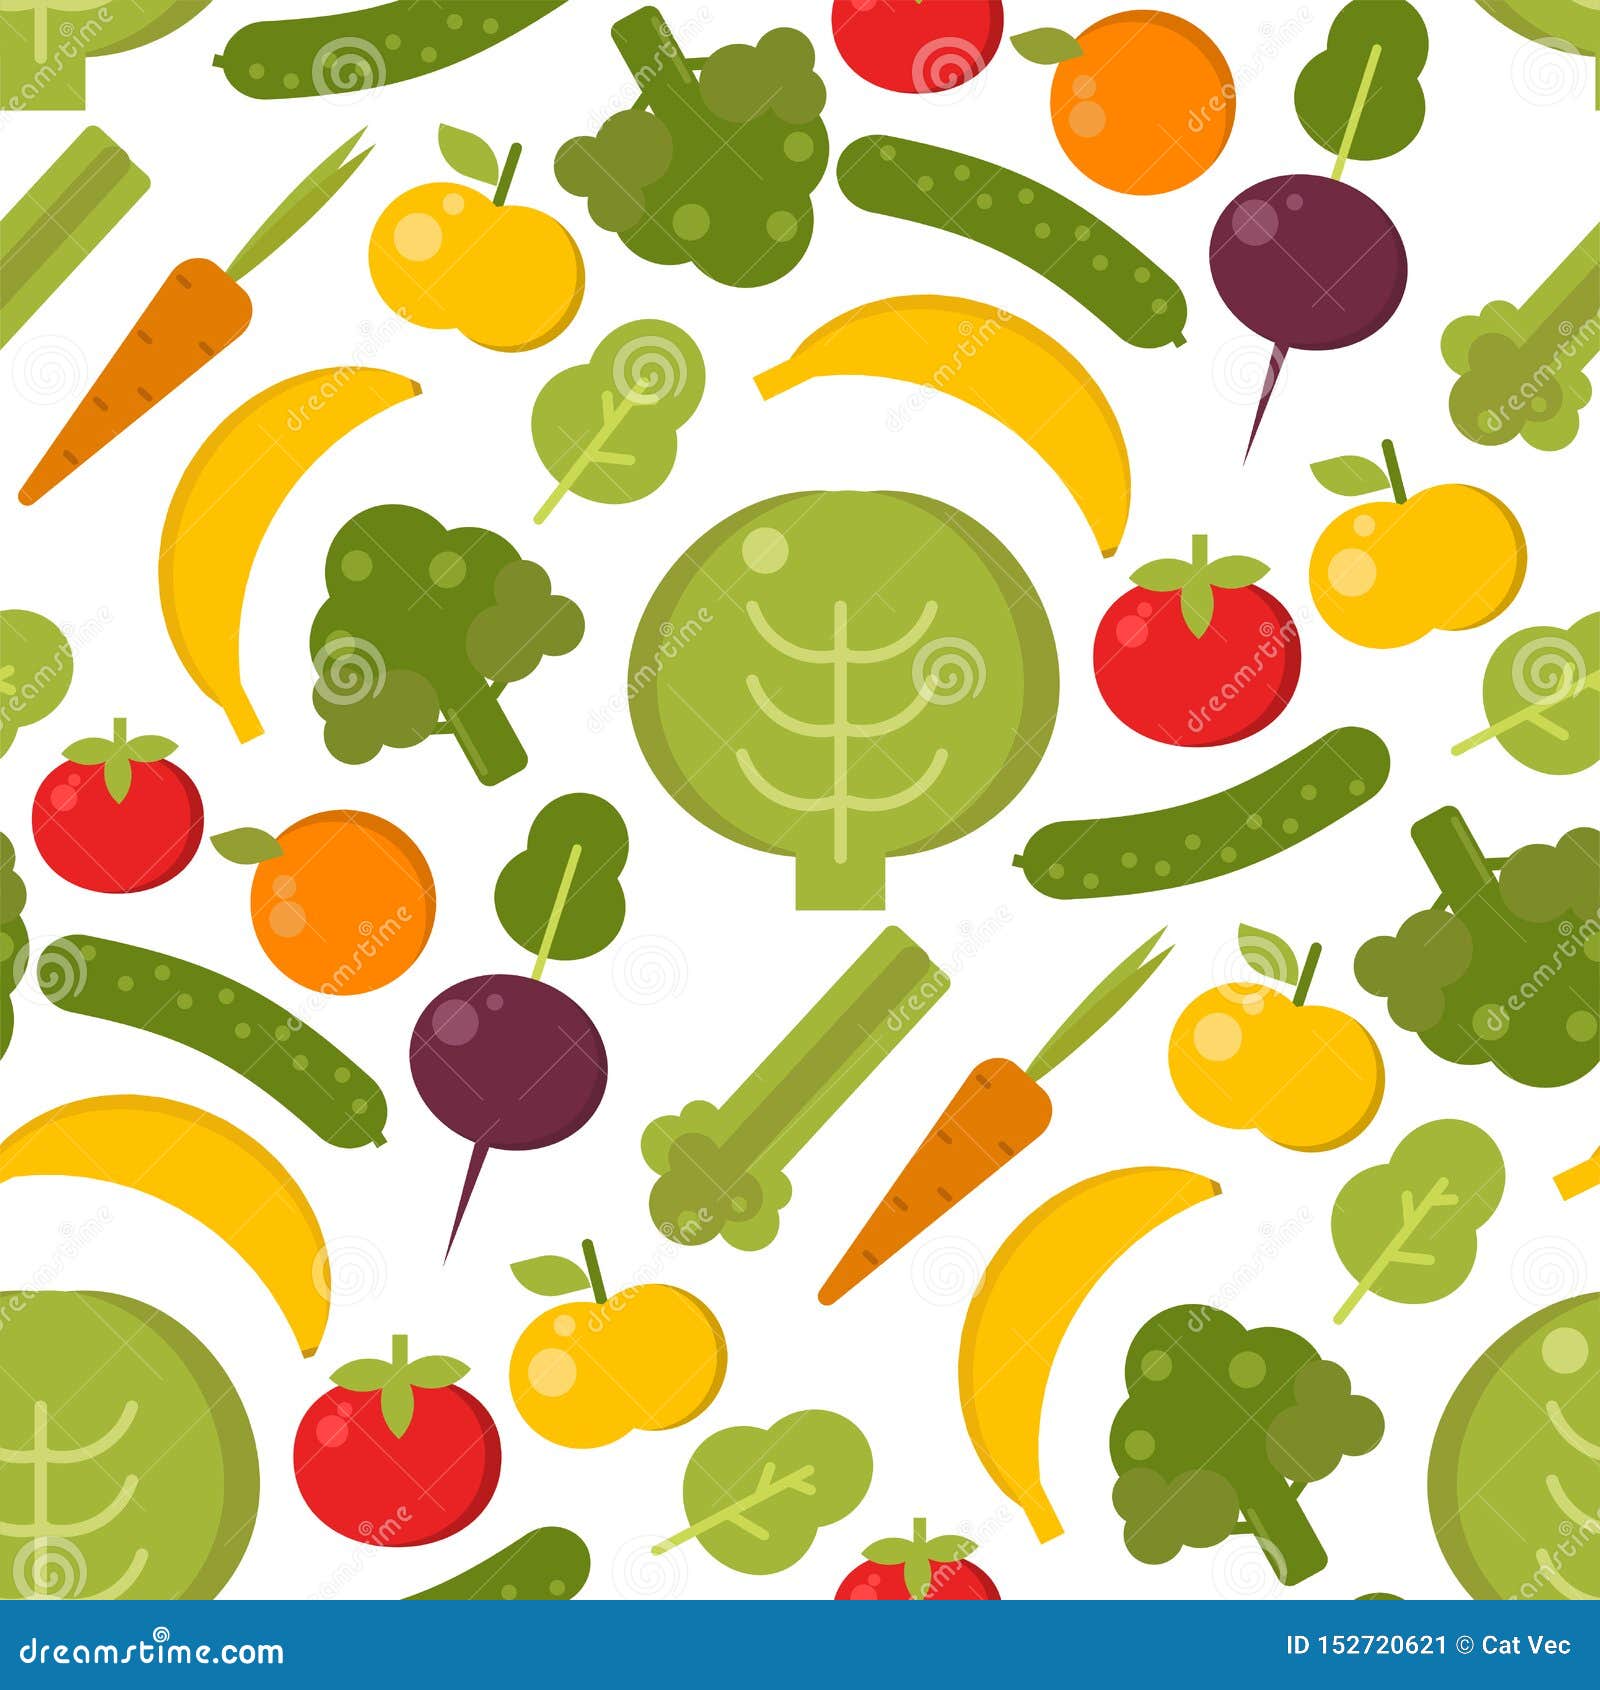 Vegetables Healthy Food Seamless Pattern Illustration. Organic Green ...